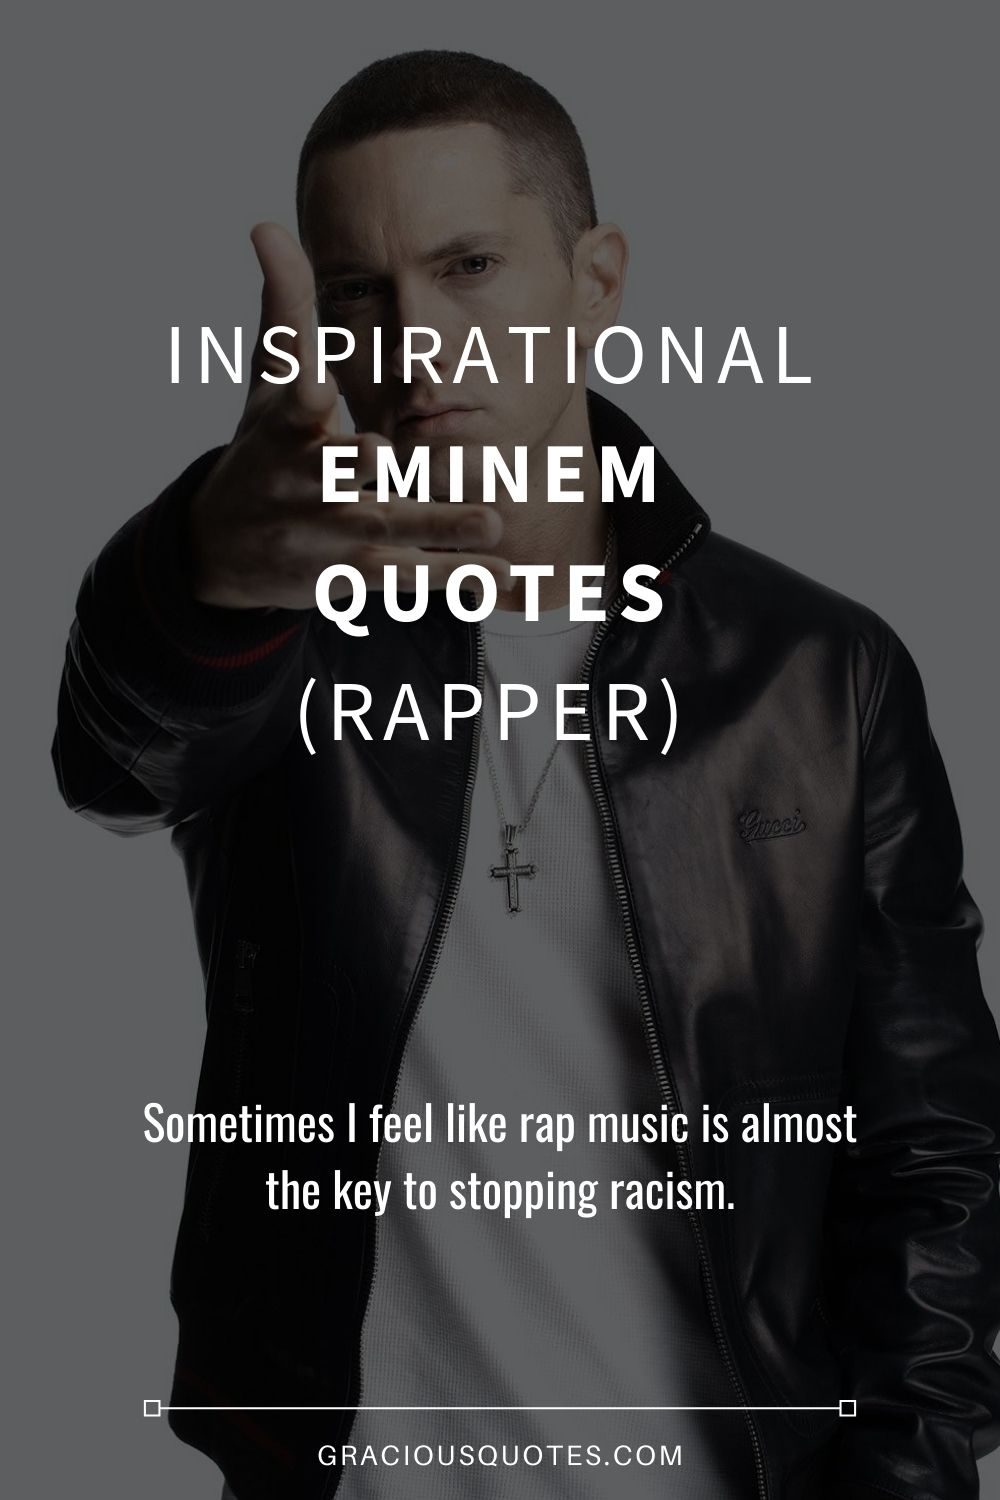 Inspirational Eminem Quotes (RAPPER) - Gracious Quotes